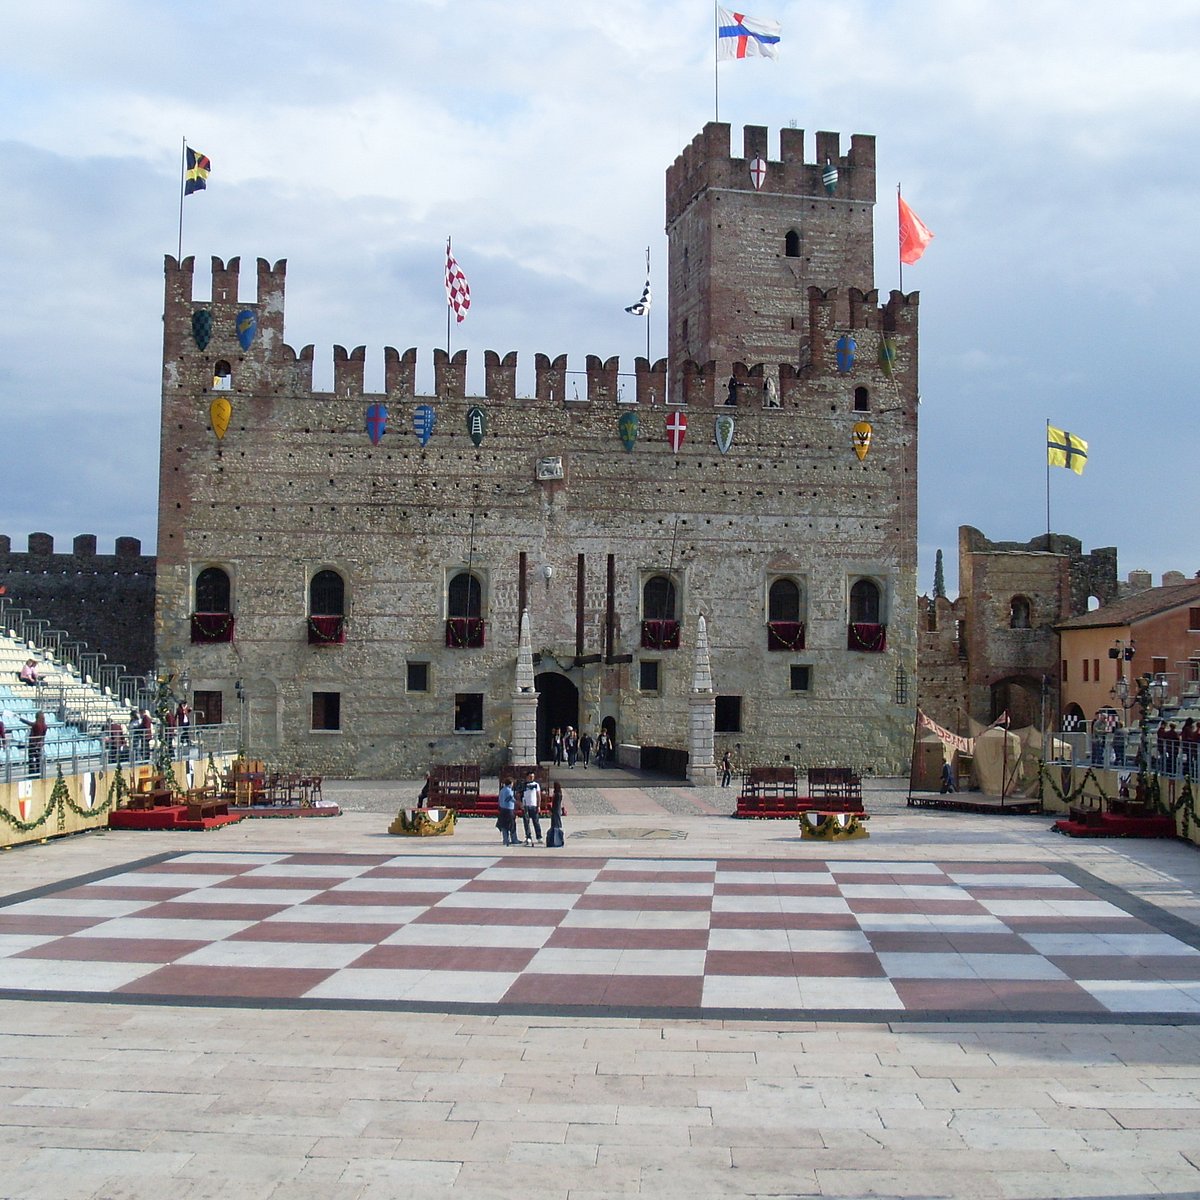 O famoso xadrez humano de Marostica - Passeios em Veneza